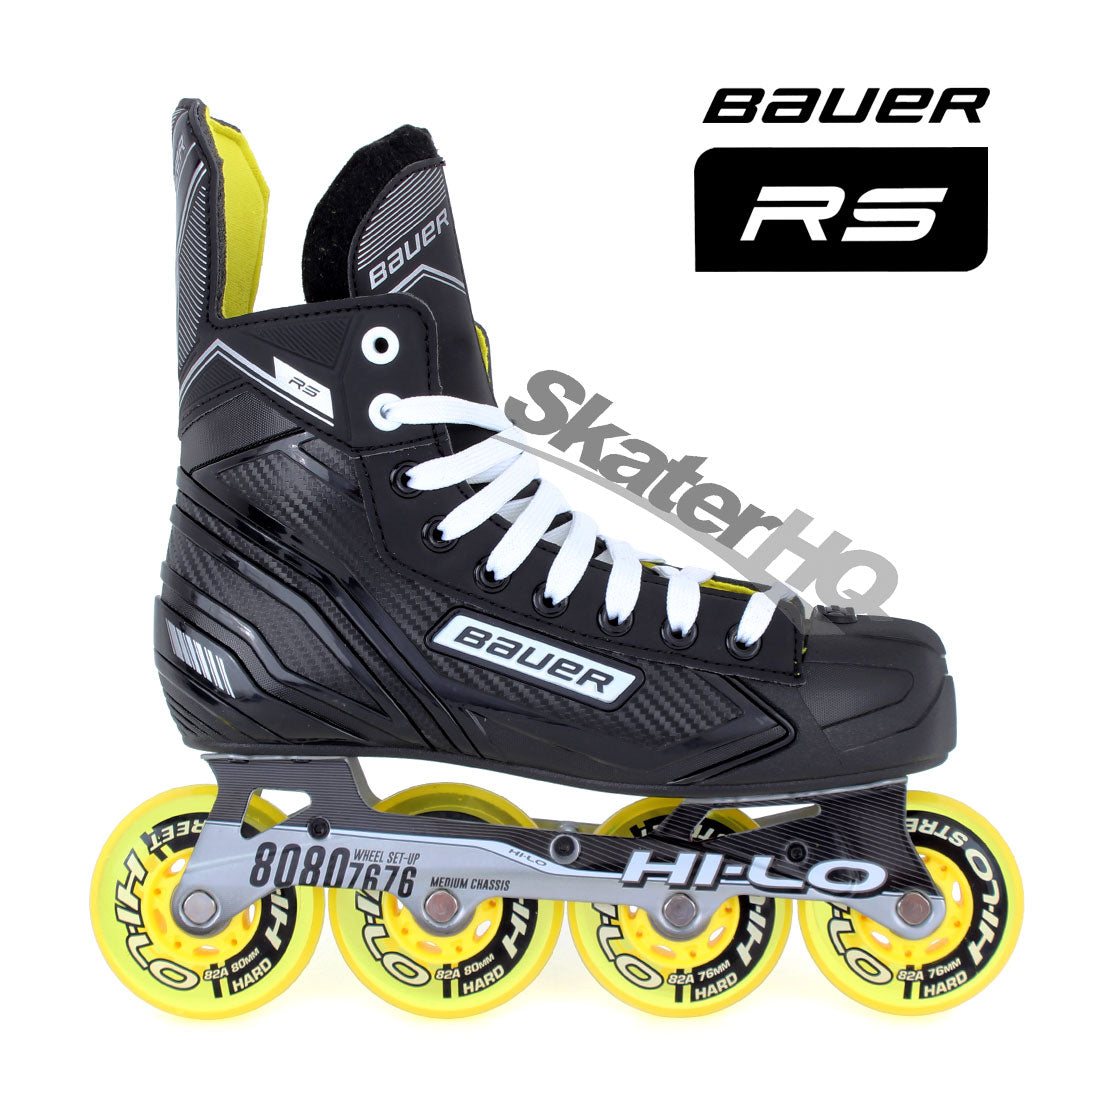 Bauer RS JR Black/Yellow 4.0 / 5US Inline Hockey Skates